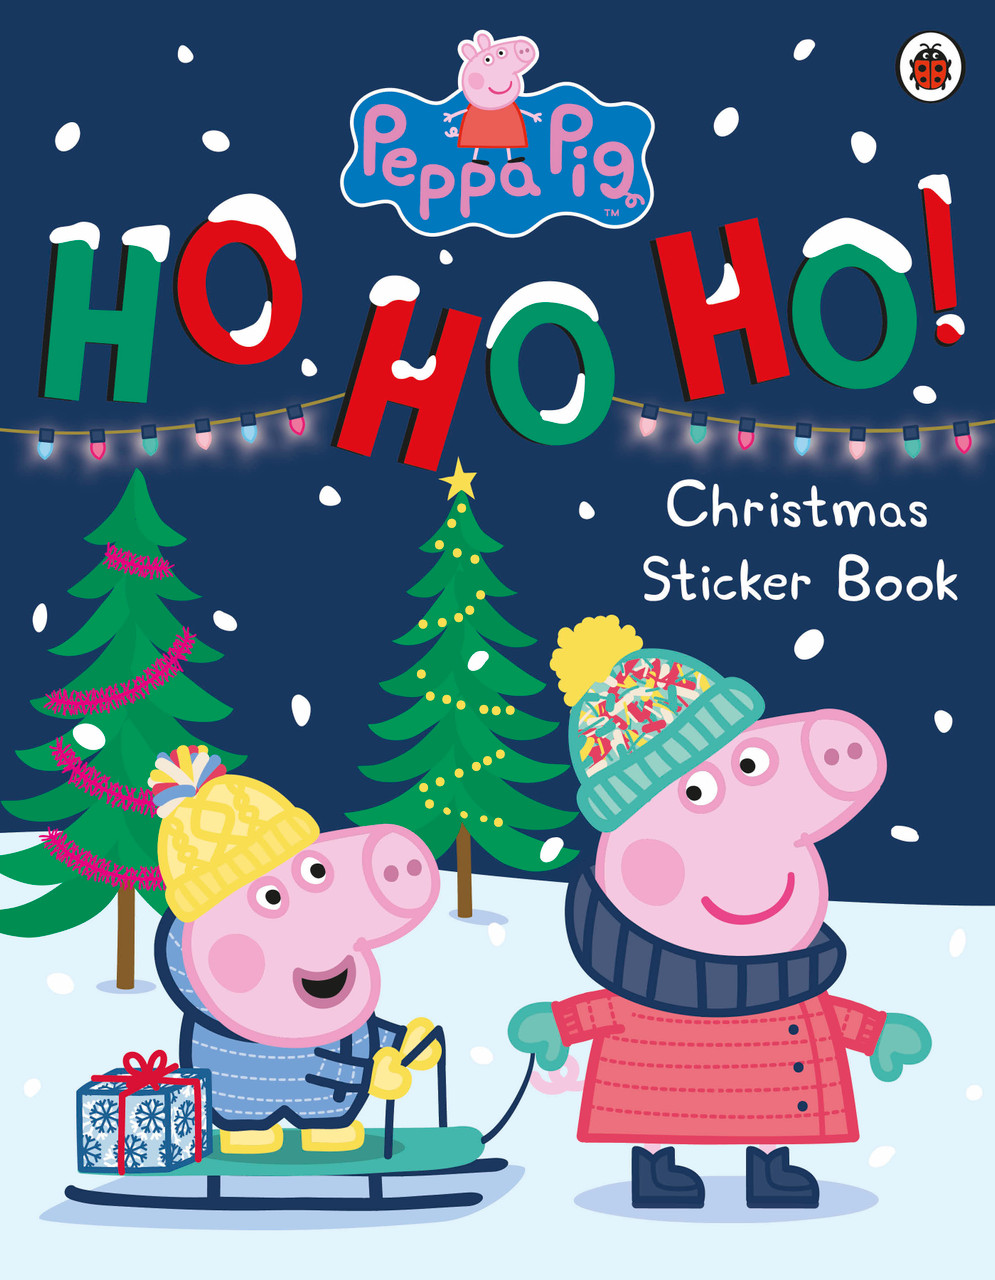 PEPPA PIG HO HO HO CHRISTMAS STICKER BOOK